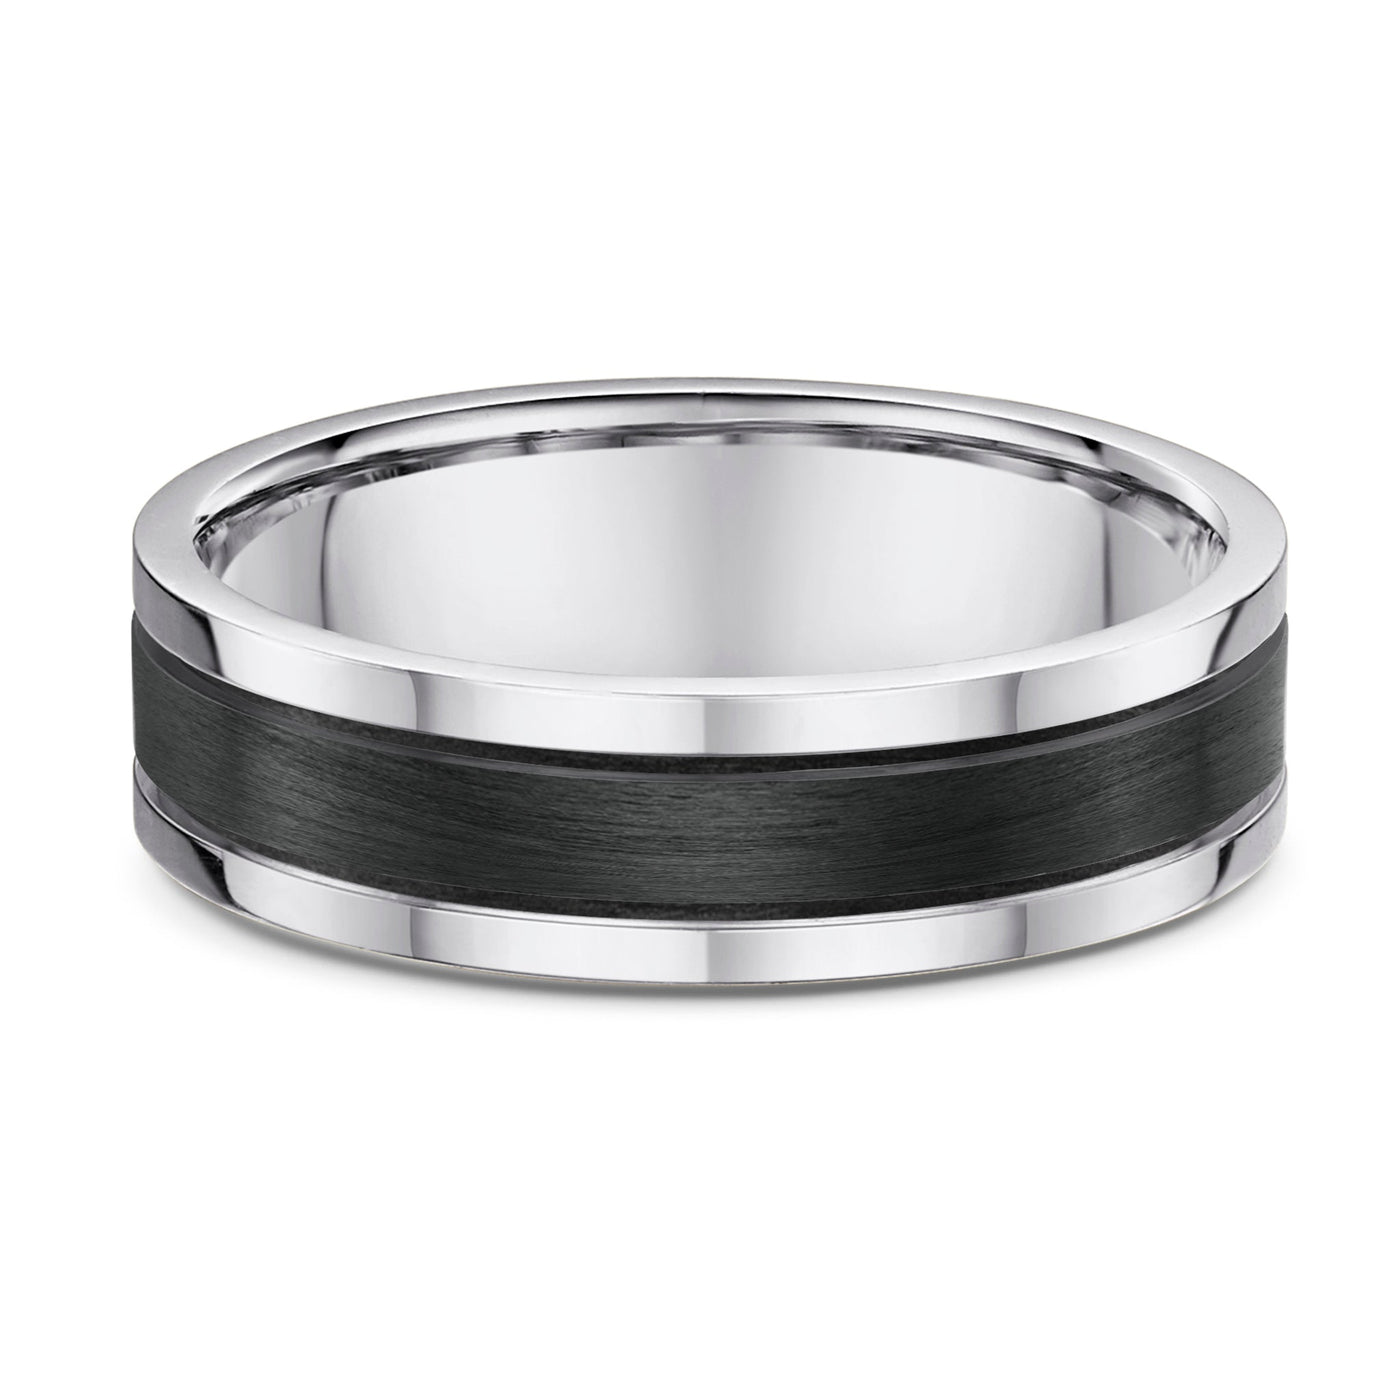 Carbon Fibre & Gold Men's Wedding Ring